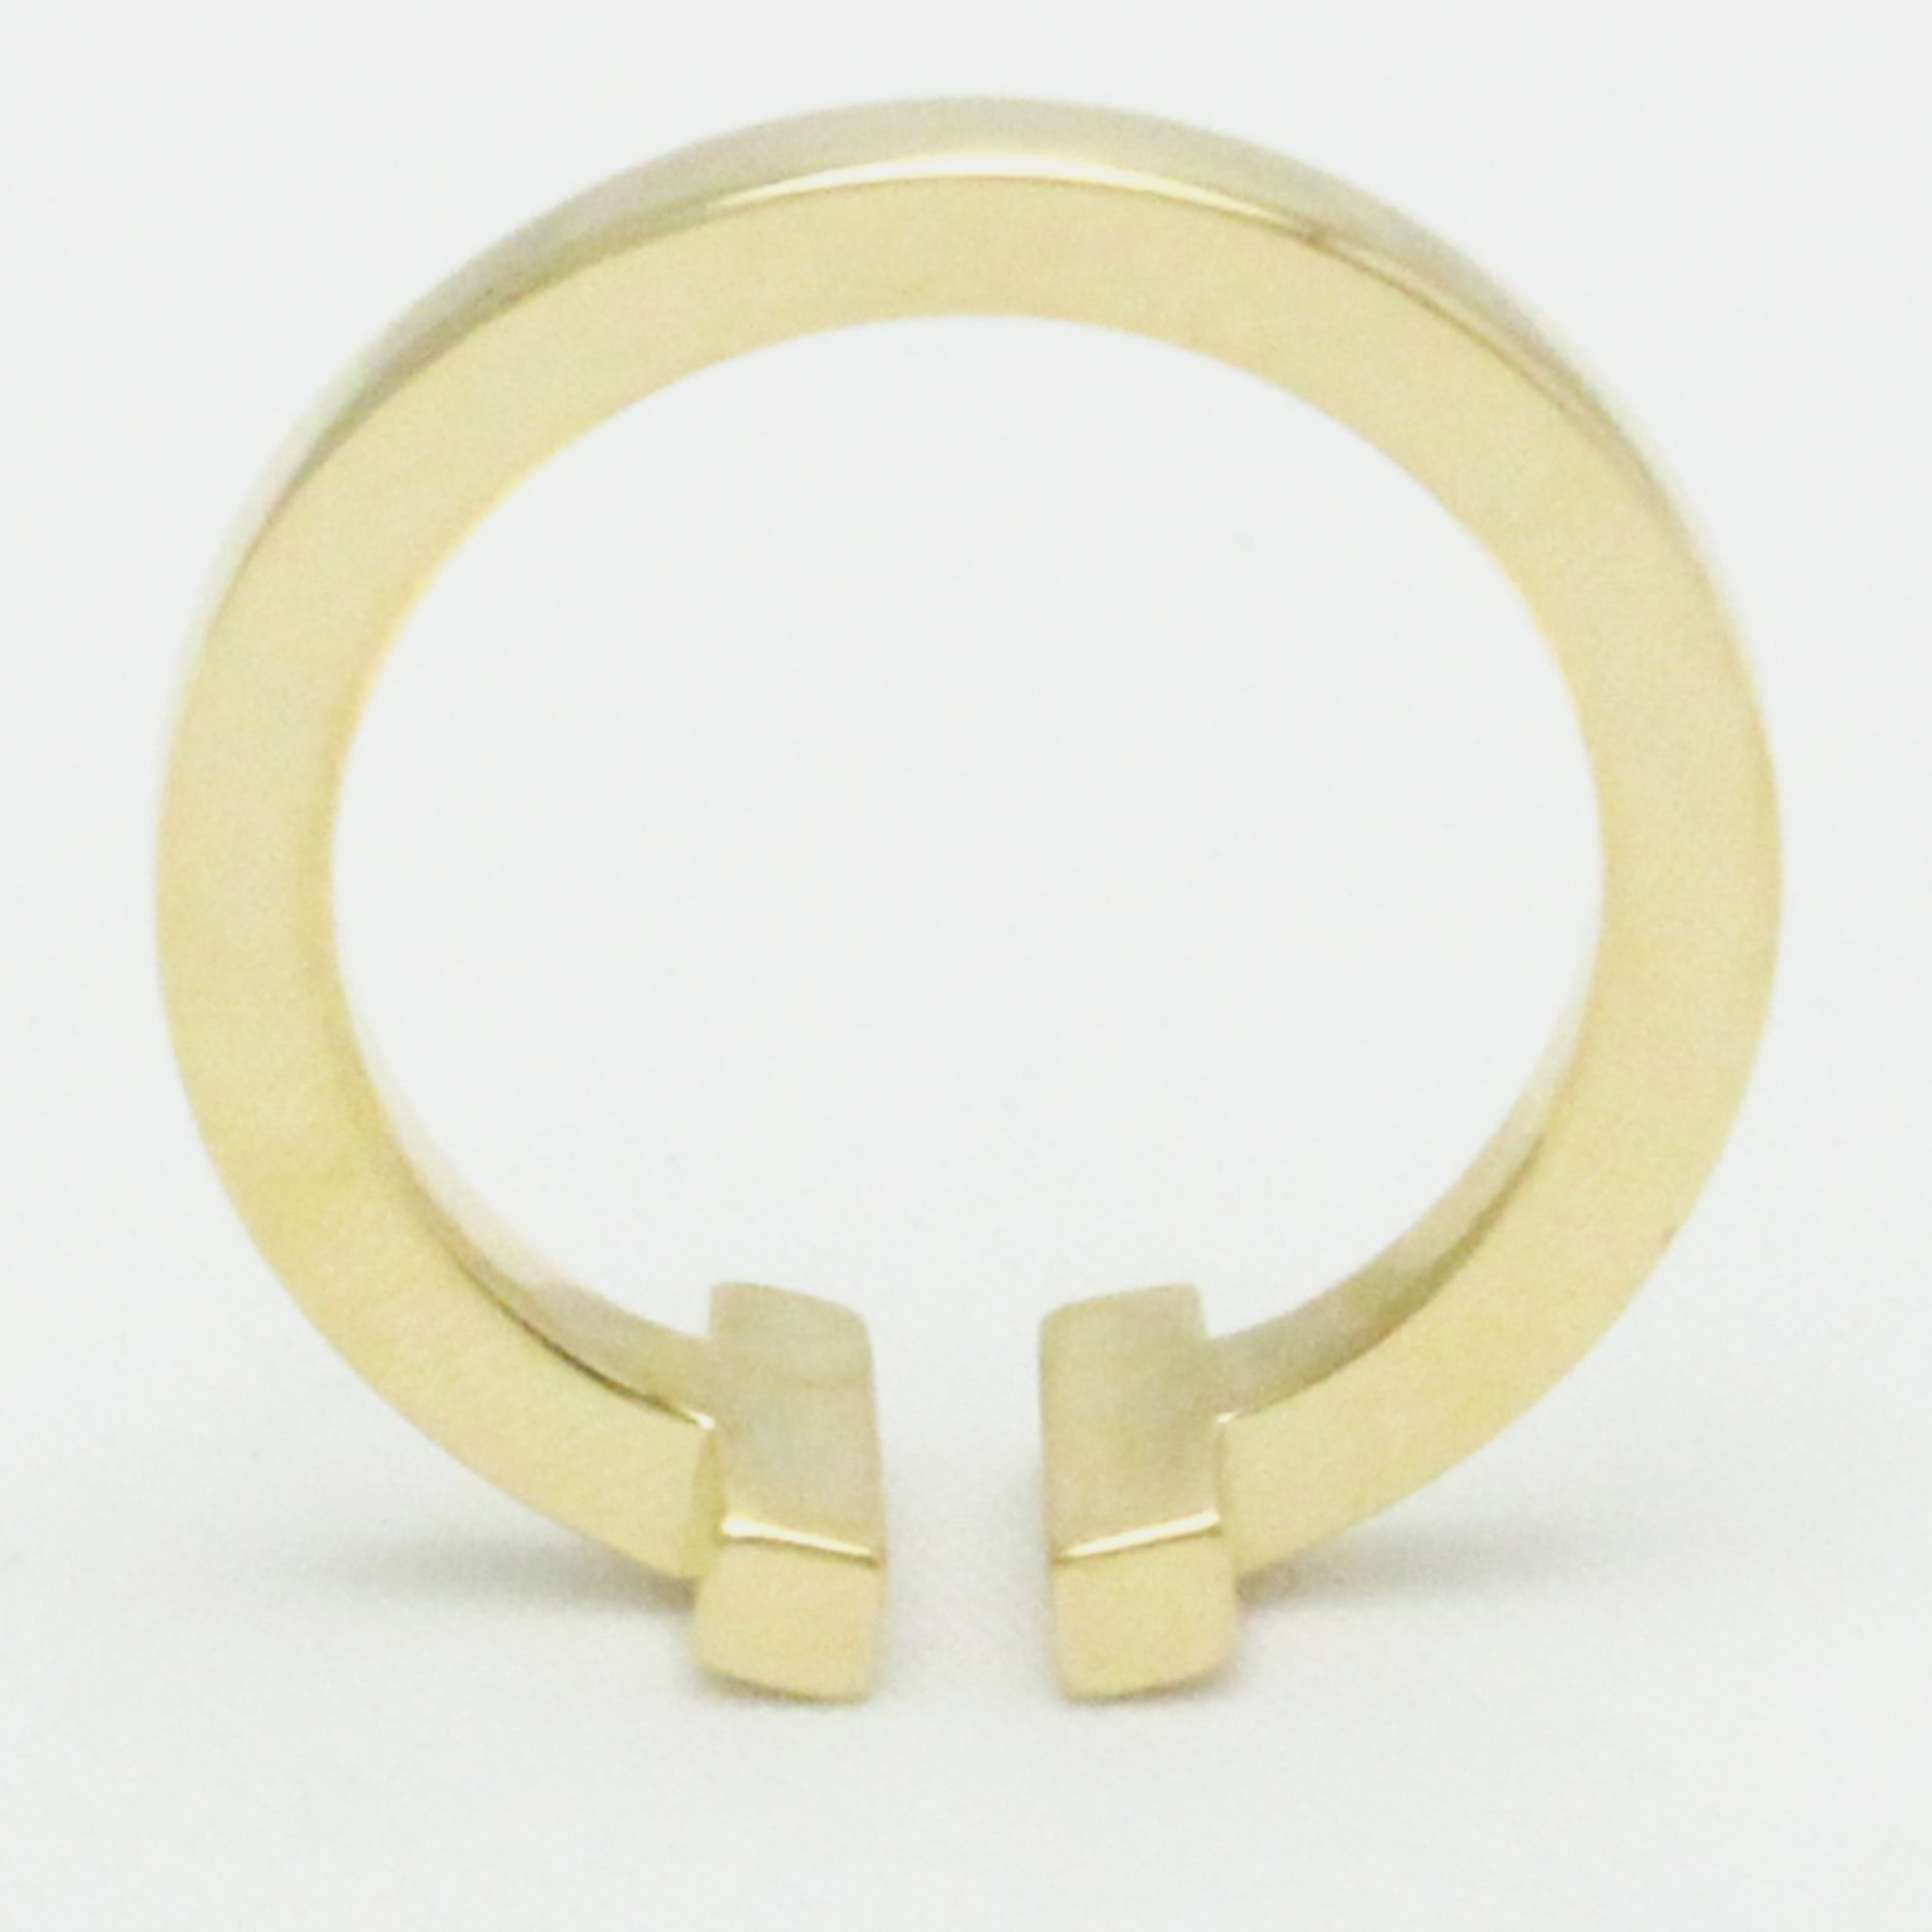 Tiffany & Co. Tiffany T 18K Yellow Gold Ring EU 54.5